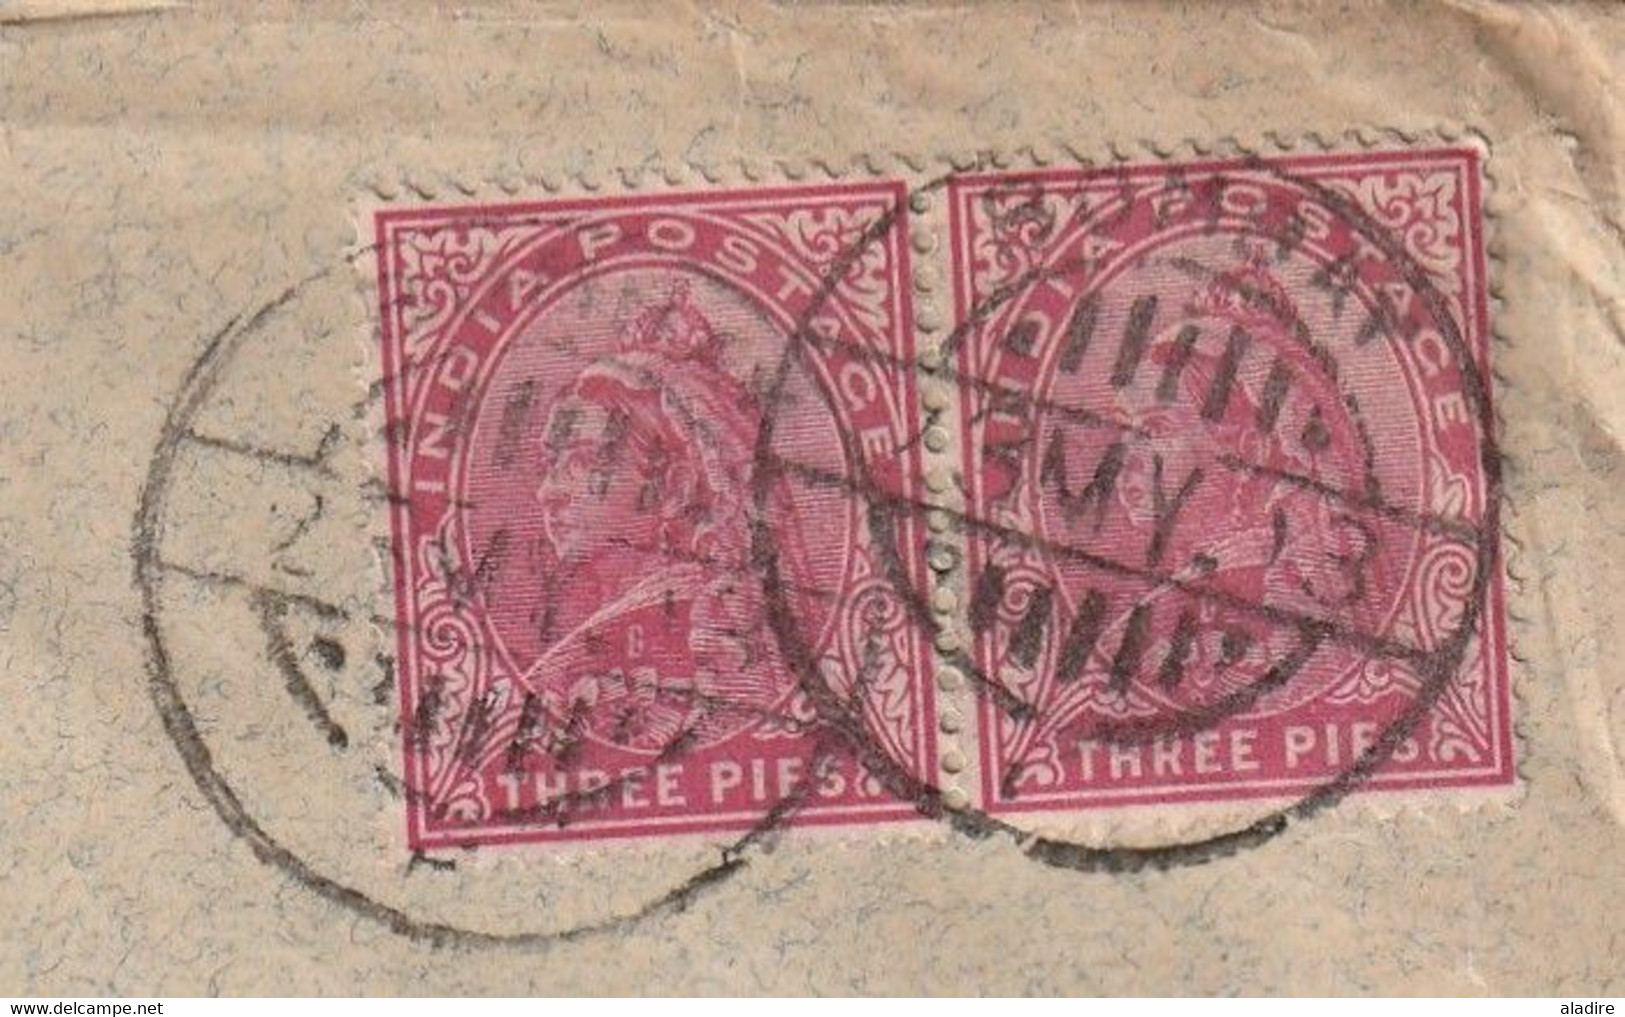 1913 - Enveloppe De BOMBAY Mumbai, Inde, GB Vers PARIS, France - PER BOOK POST - 6 Pies - 2 X 3 Victoria Stamps - 1911-35  George V